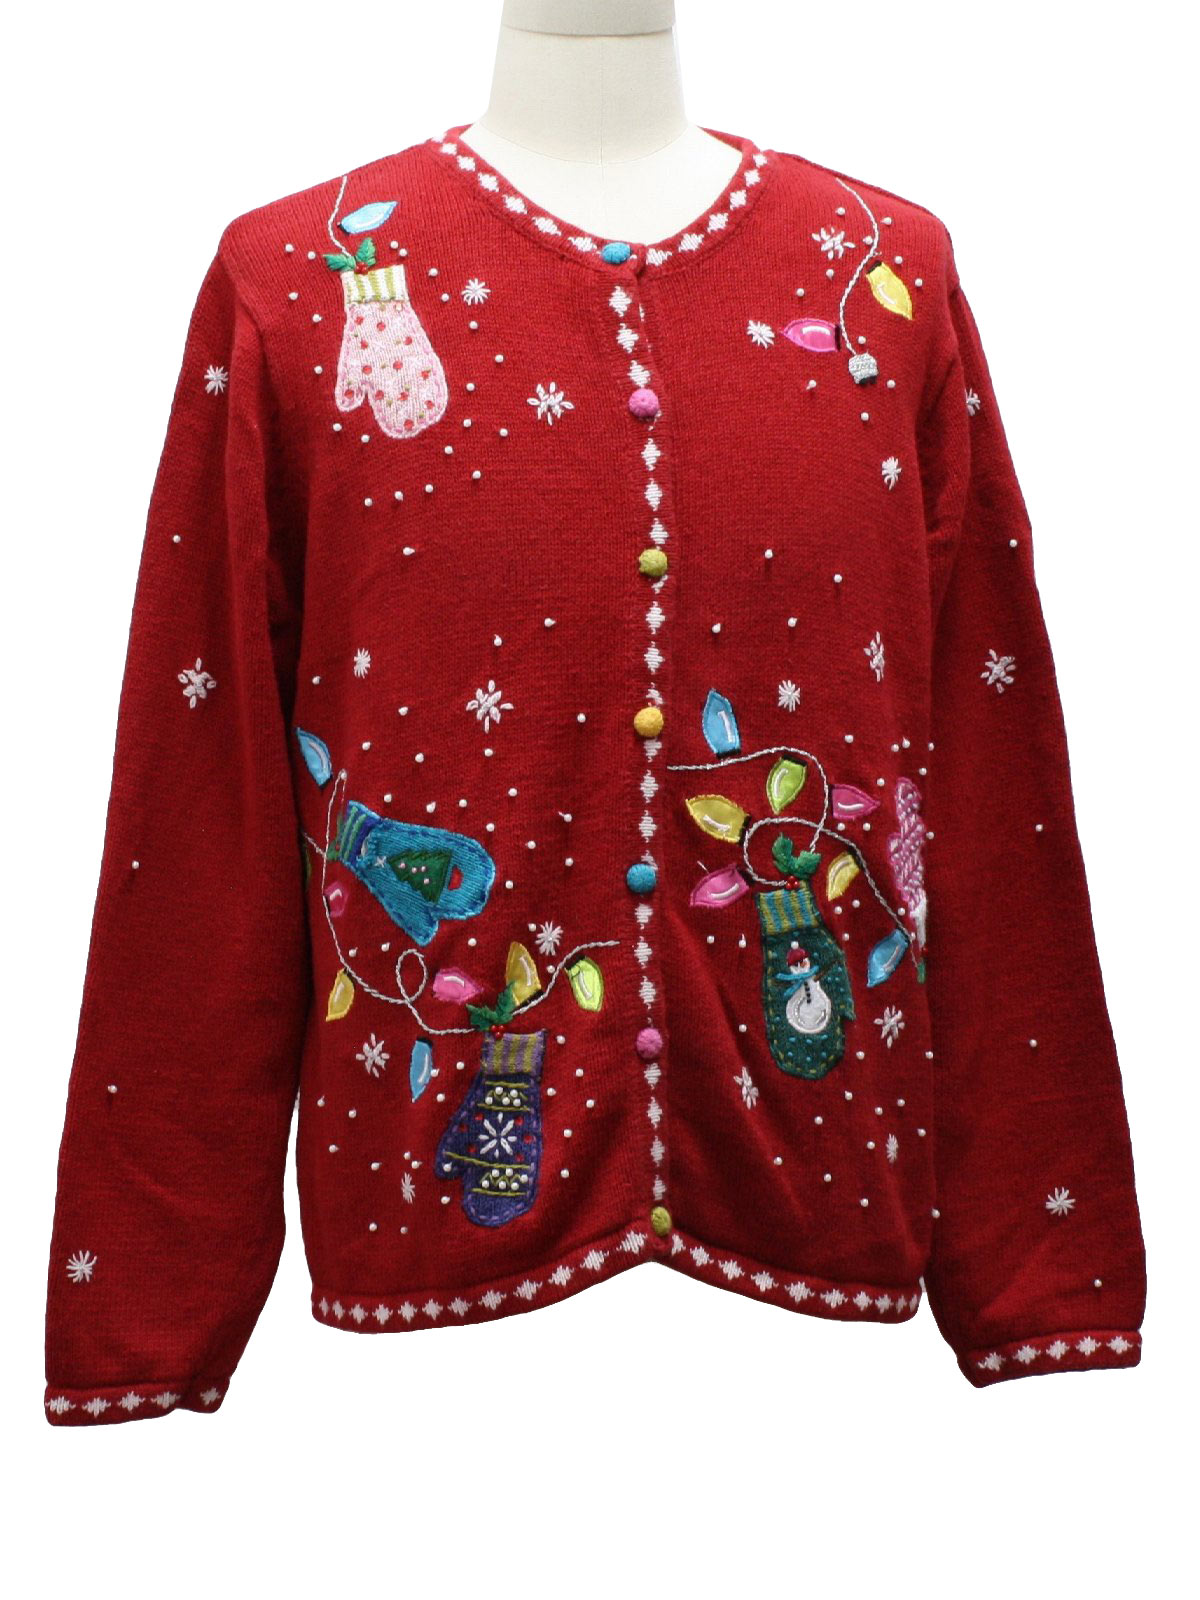 Womens Ugly Christmas Sweater: -Karen Scott- Womens red background ...